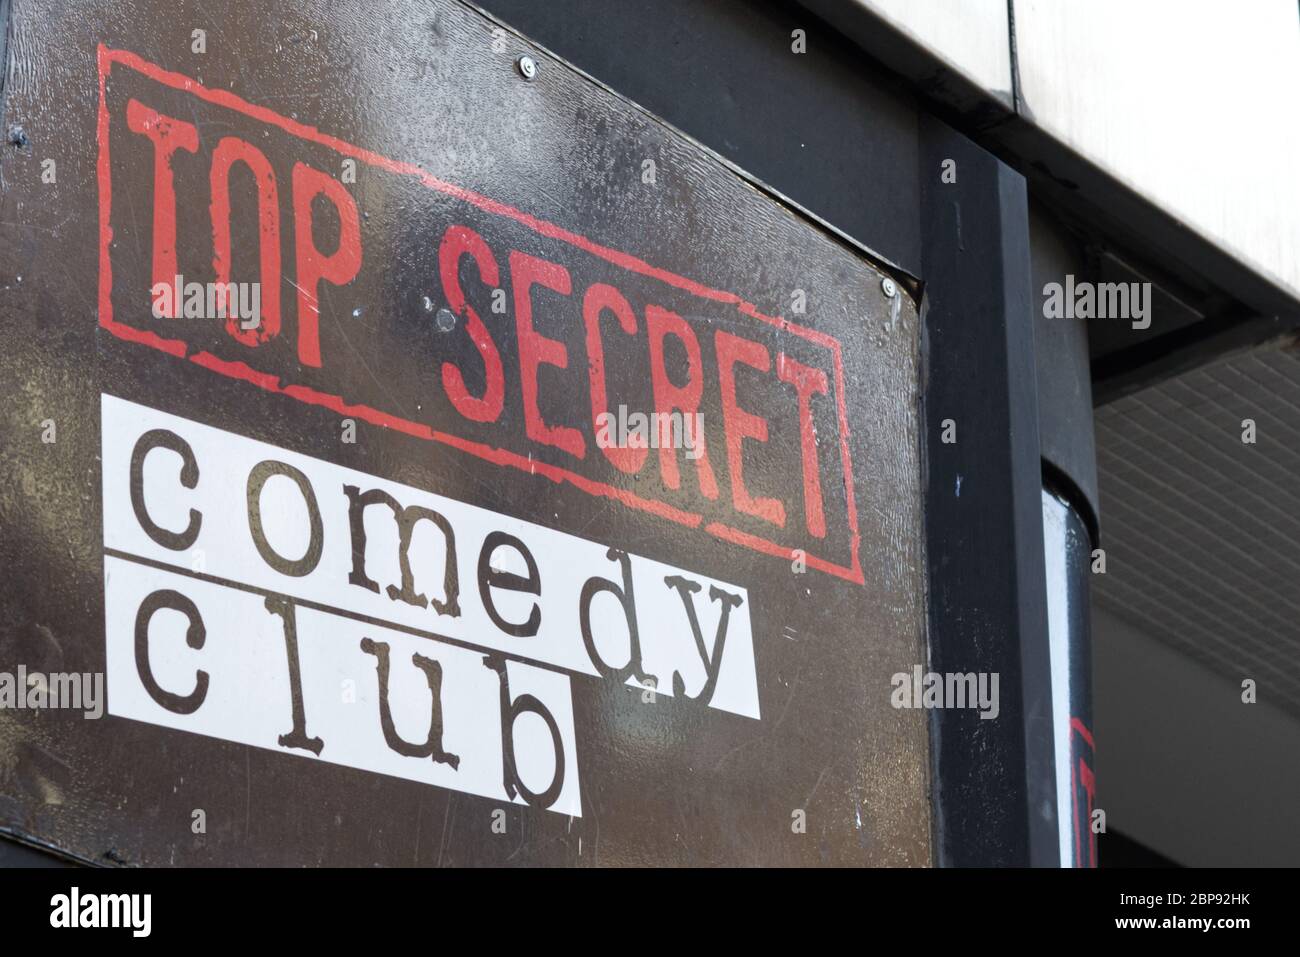 top secret, comedy club, sign London Stock Photo